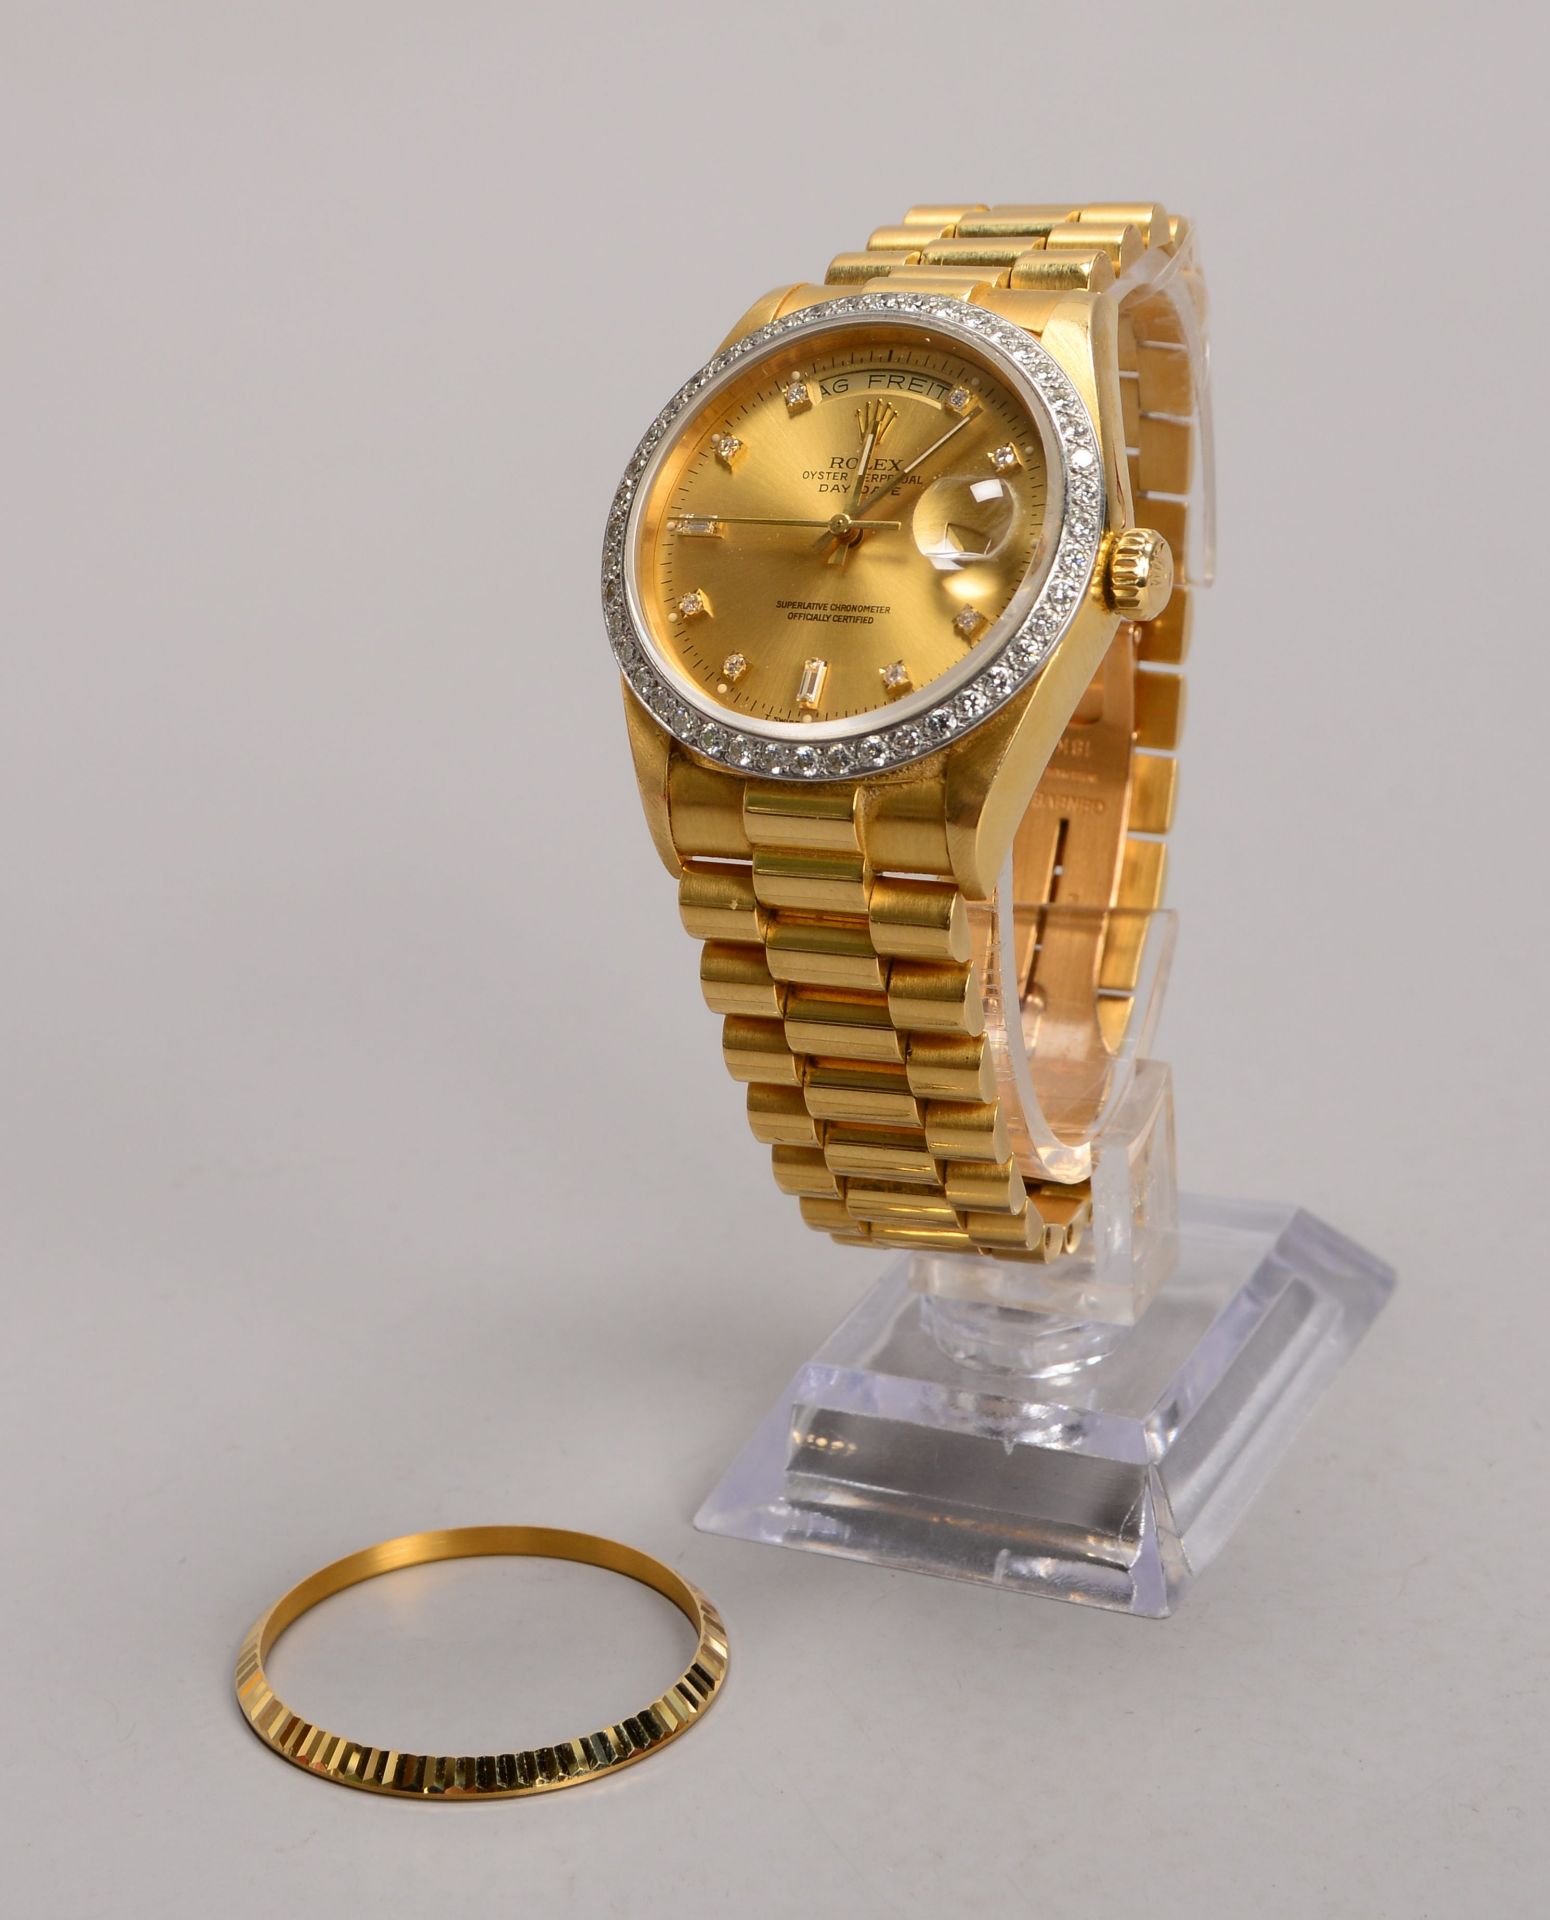 Herrenarmbanduhr (Chronometer der Superlative), Rolex Oyster Perpetual Day-Date&, Automatik - Image 3 of 4